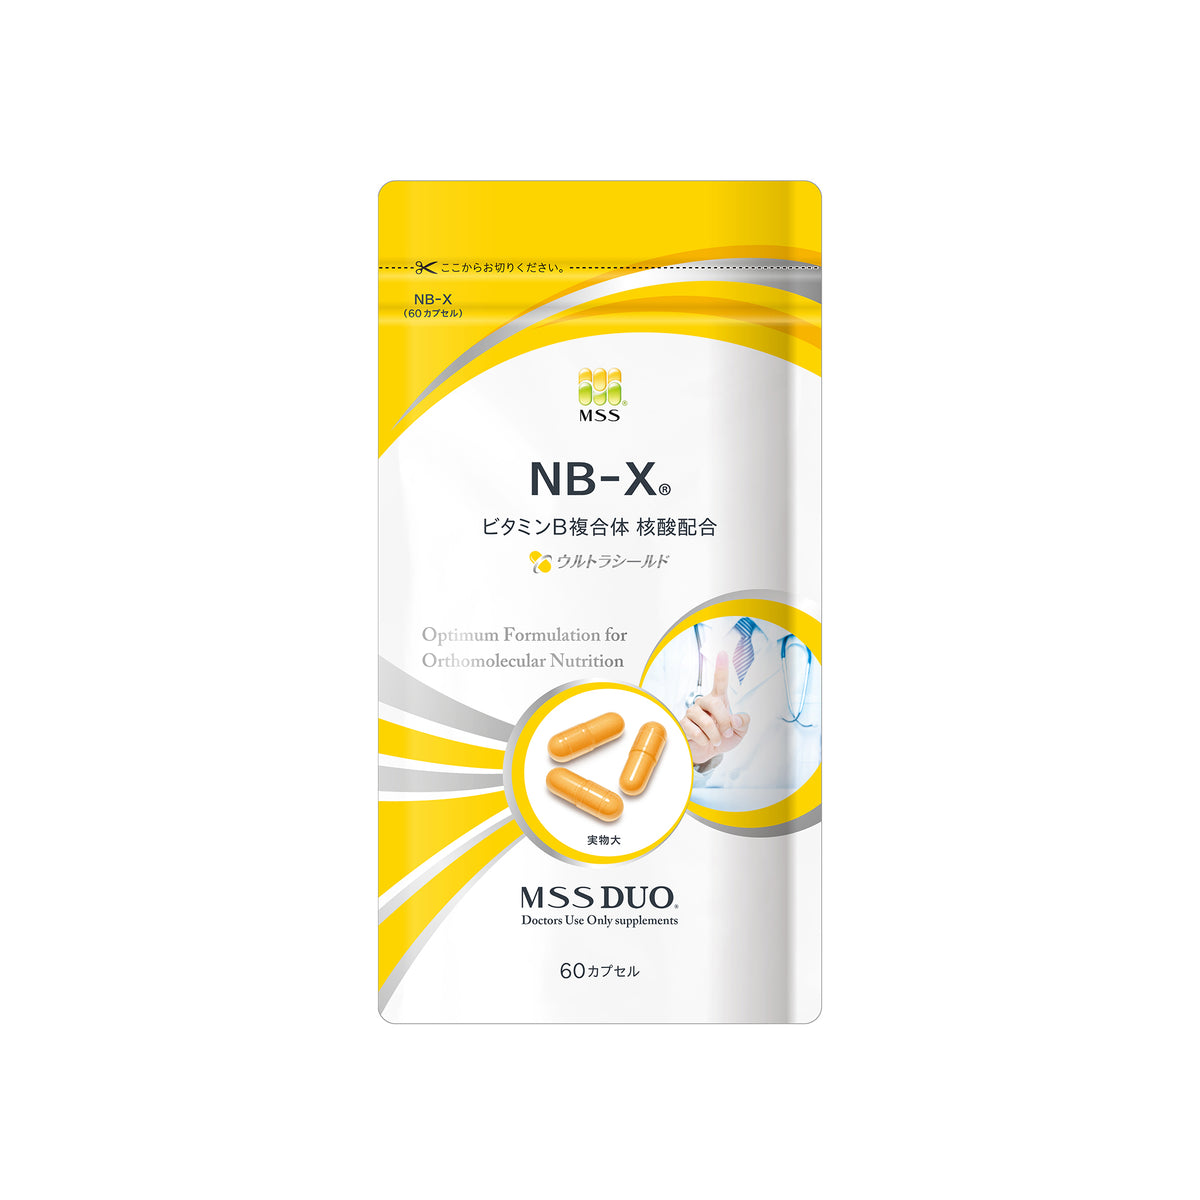 NB-X ビタミンB群サプリメント新品未使用品です